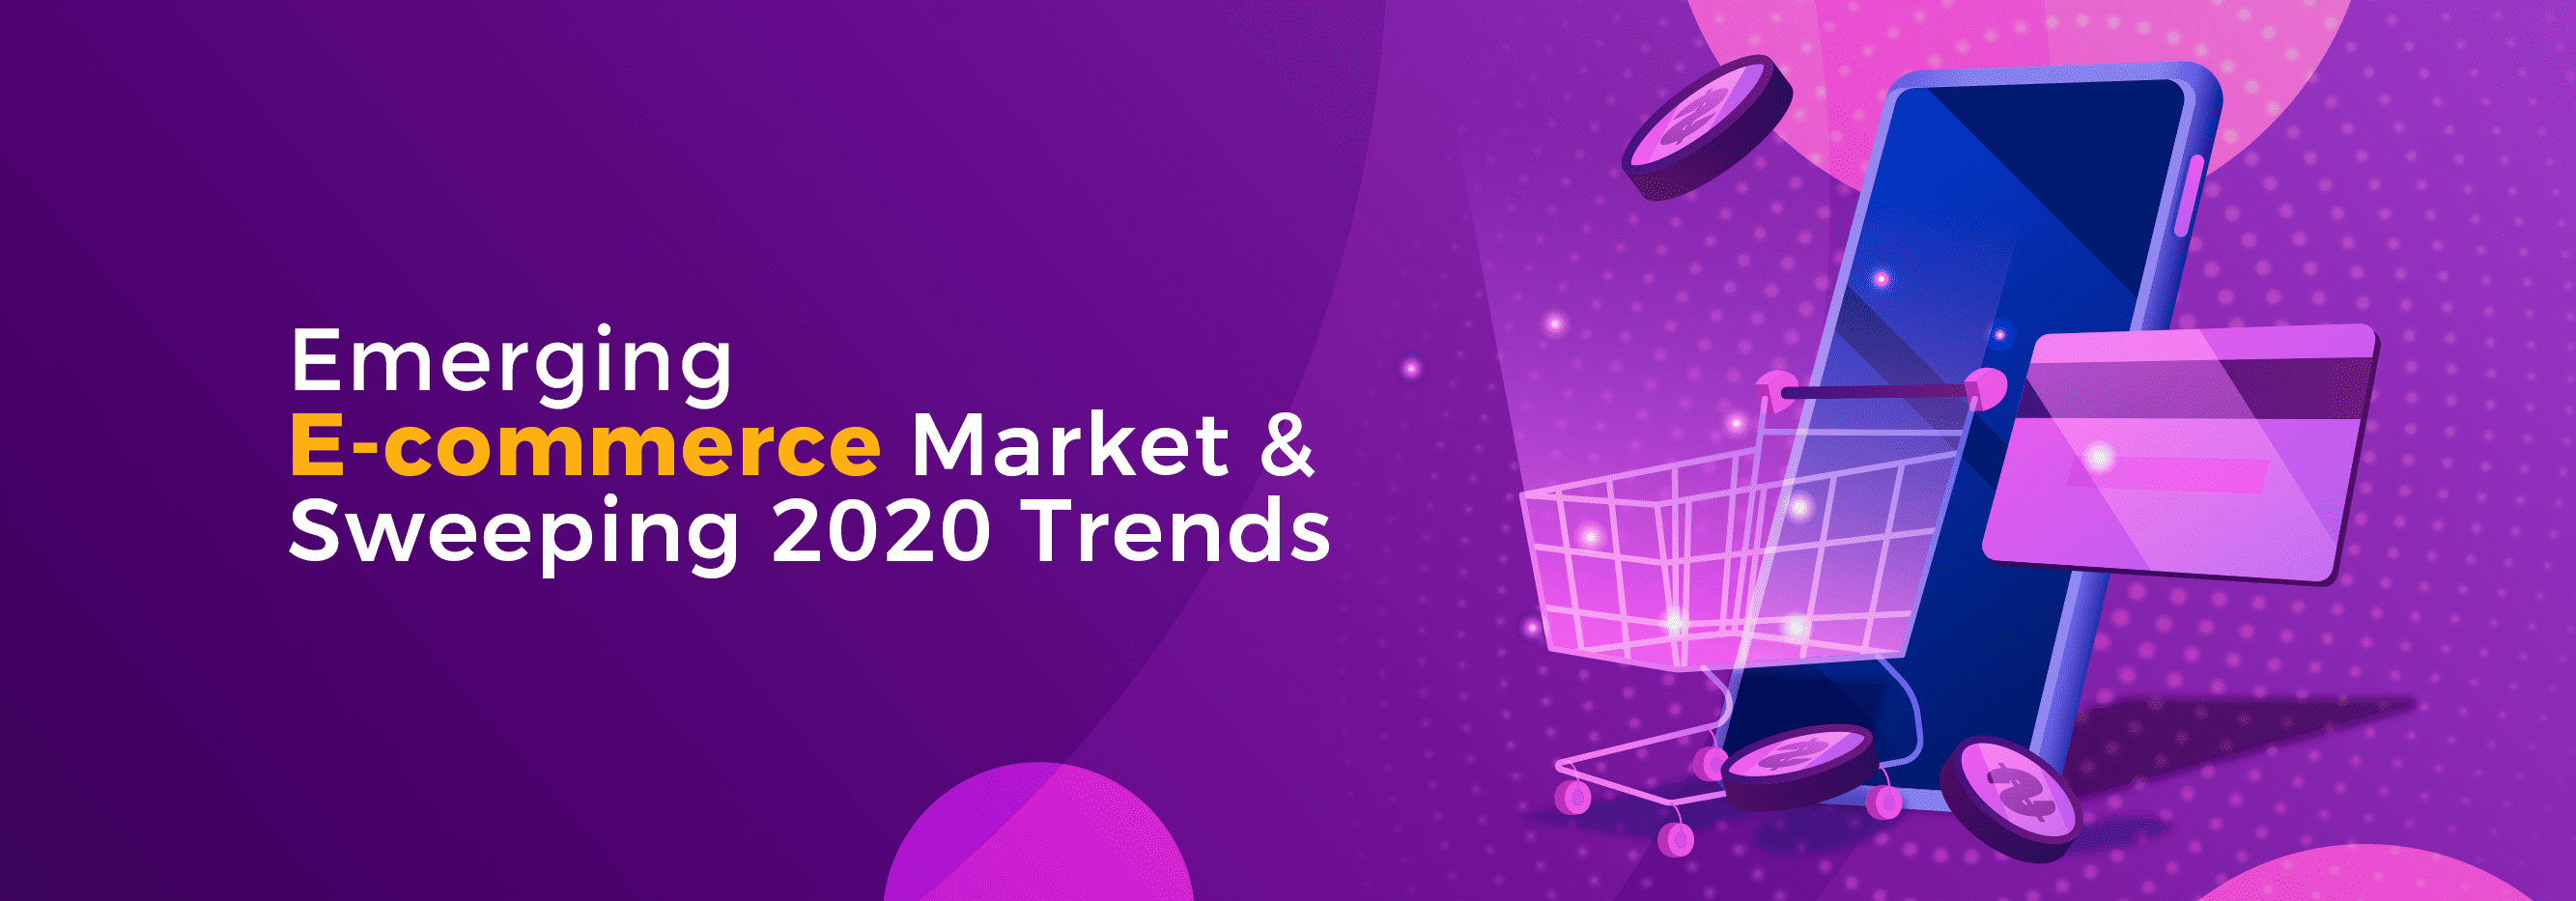 Emerging E-commerce Market & Sweeping 2020 Trends_banner